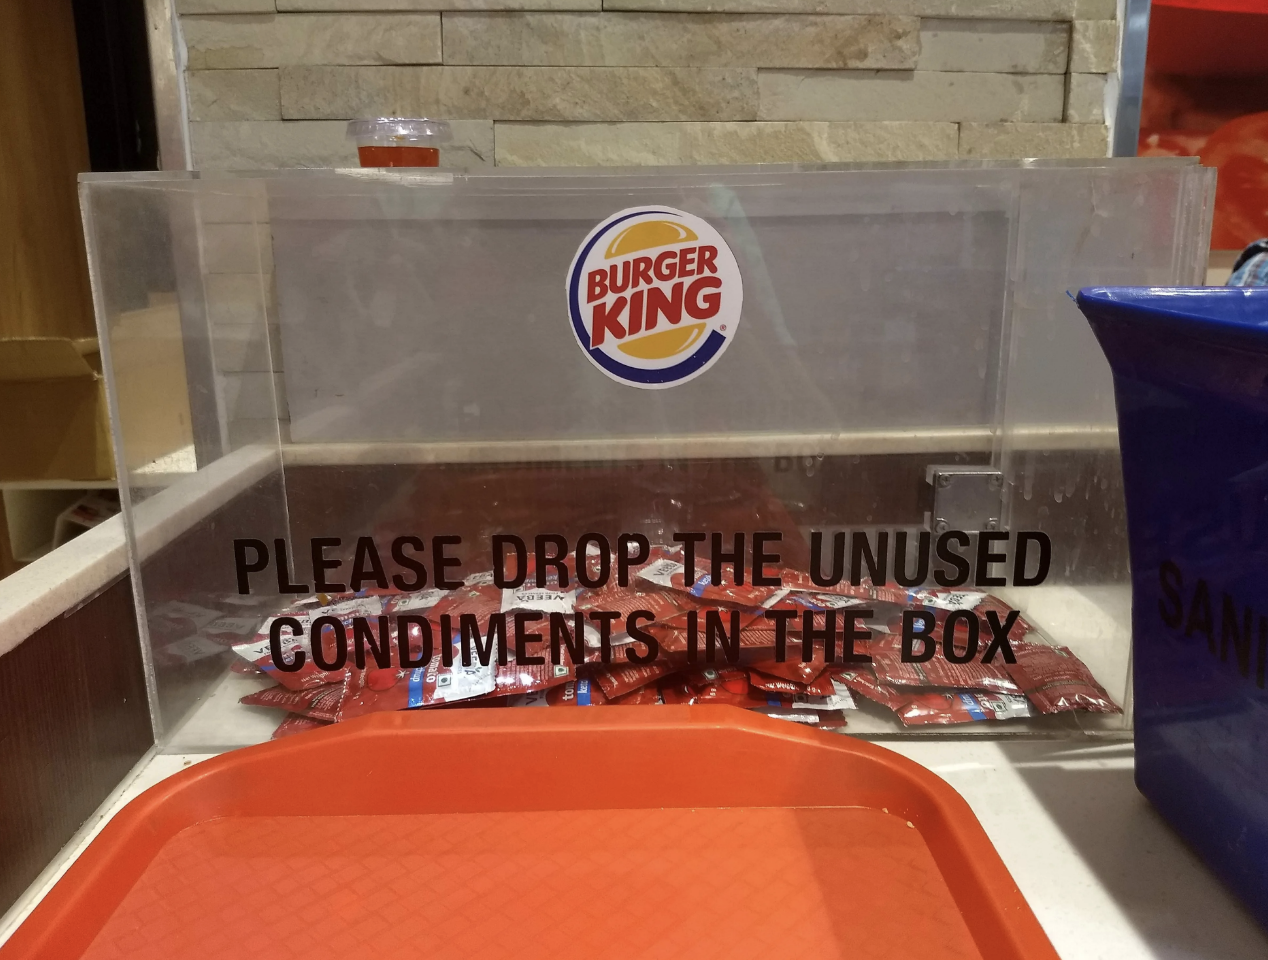 A bin for unused condiments